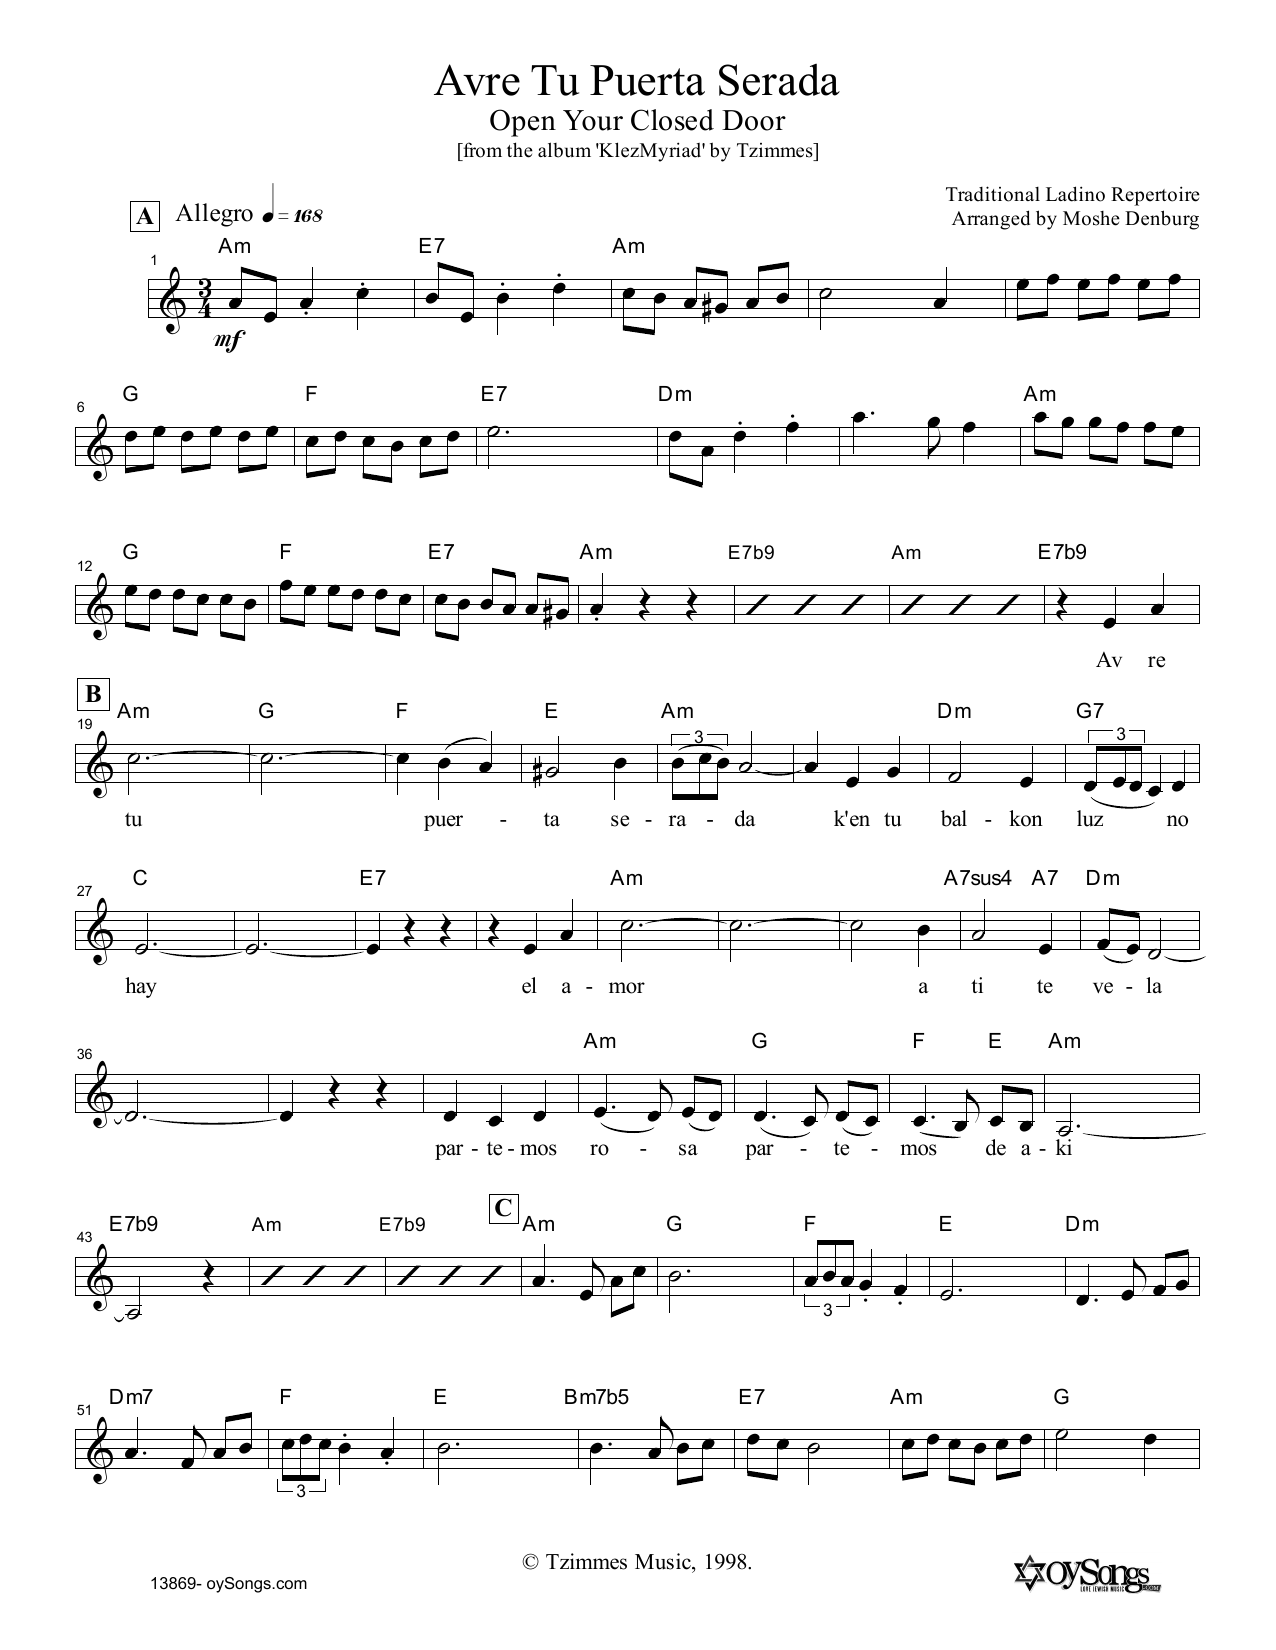 Moshe Denburg Avre Tu Puerta Serada Sheet Music Notes & Chords for Melody Line, Lyrics & Chords - Download or Print PDF